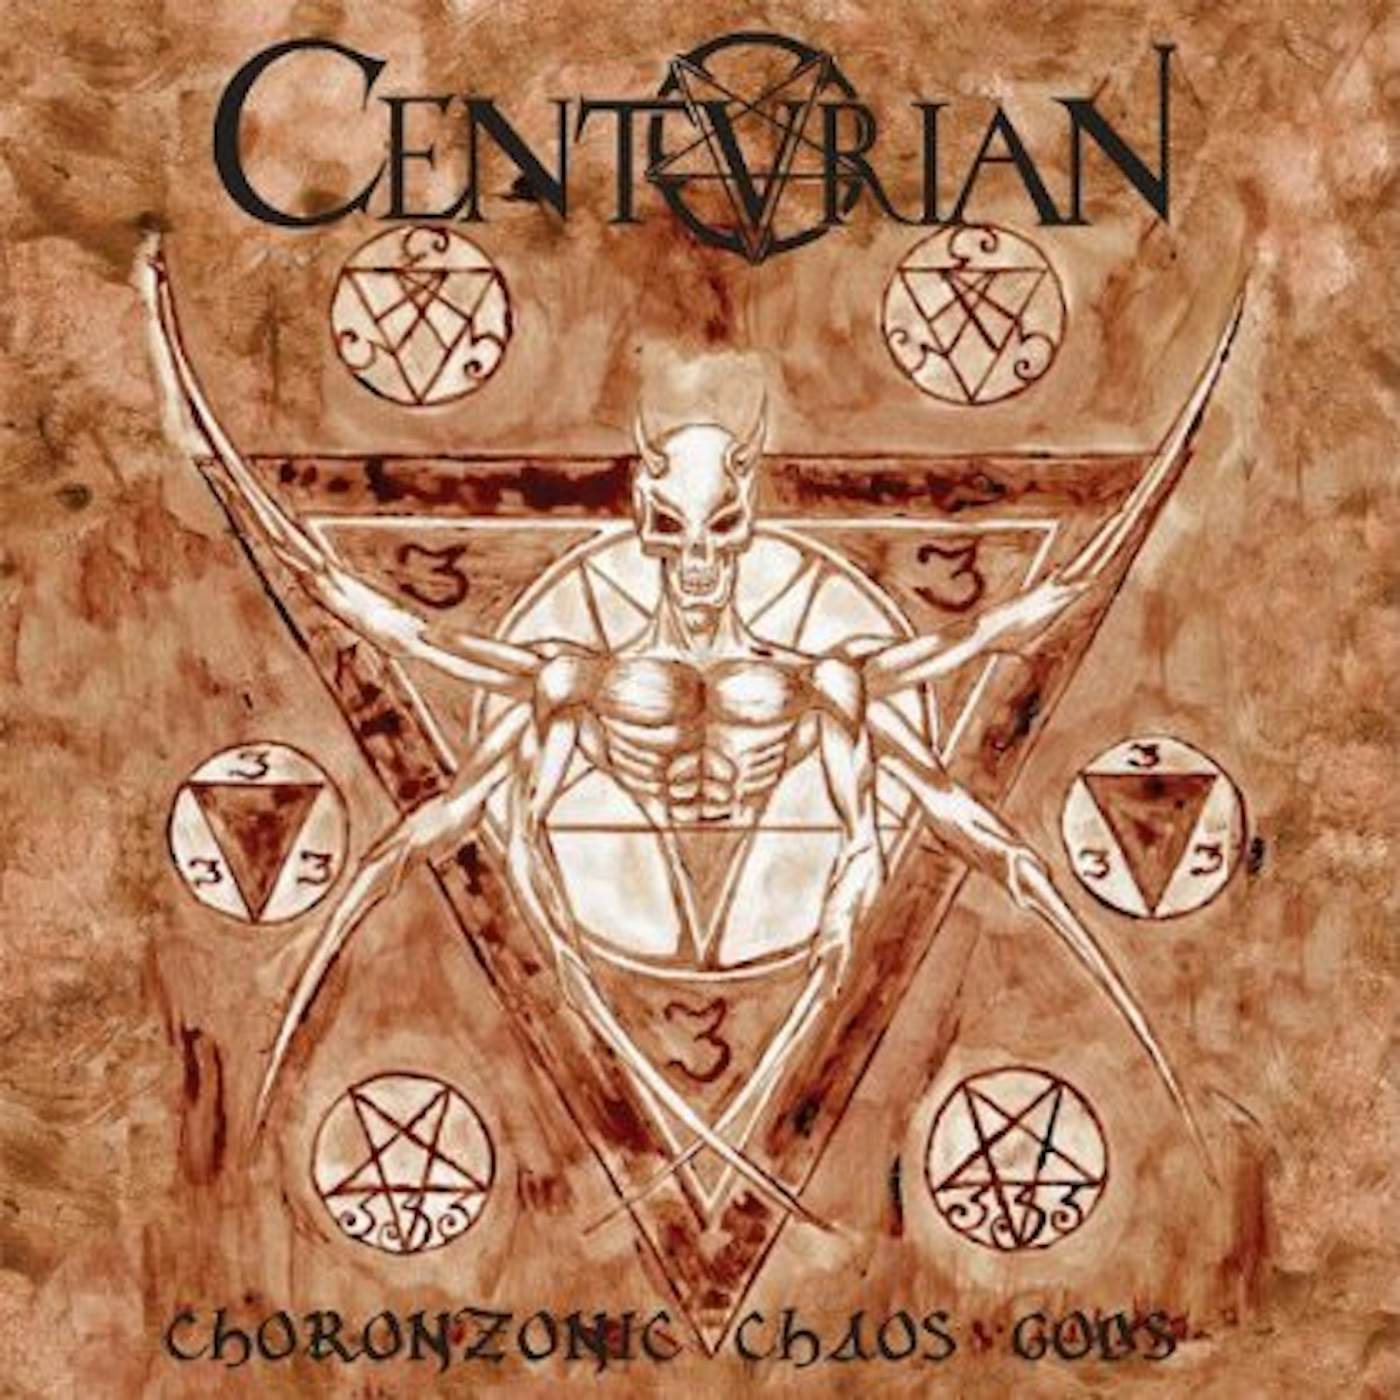 Centurian CHORONZONIC CHAOS GODS CD